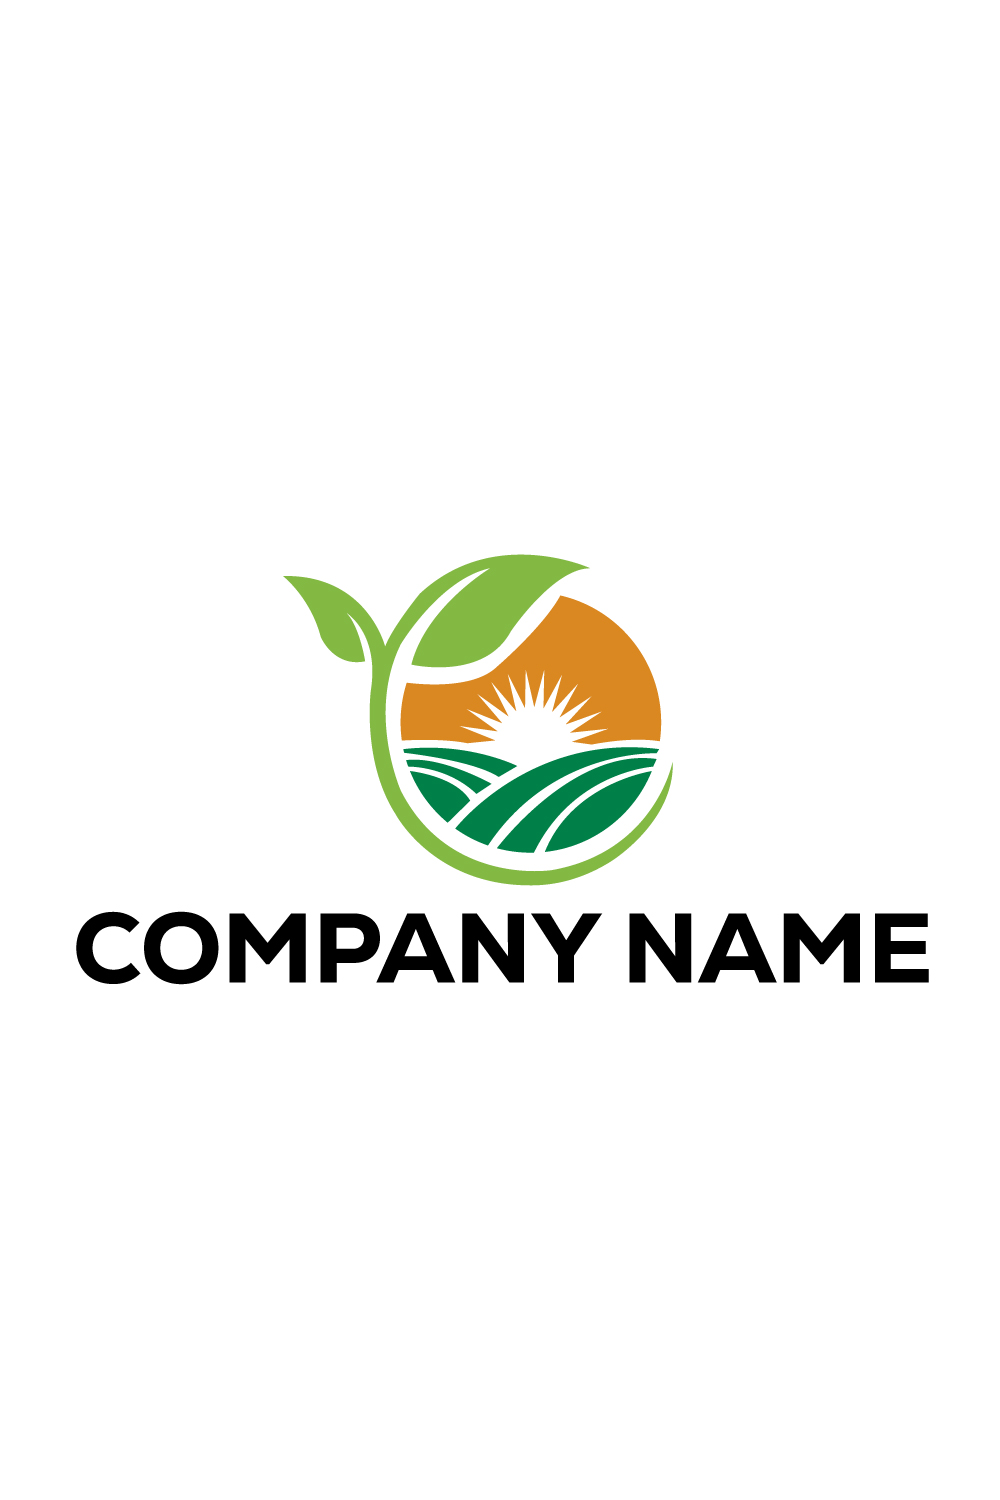 Farm Logo, Agriculture Logo, Farm design, Farm business, Farm icon pinterest preview image.